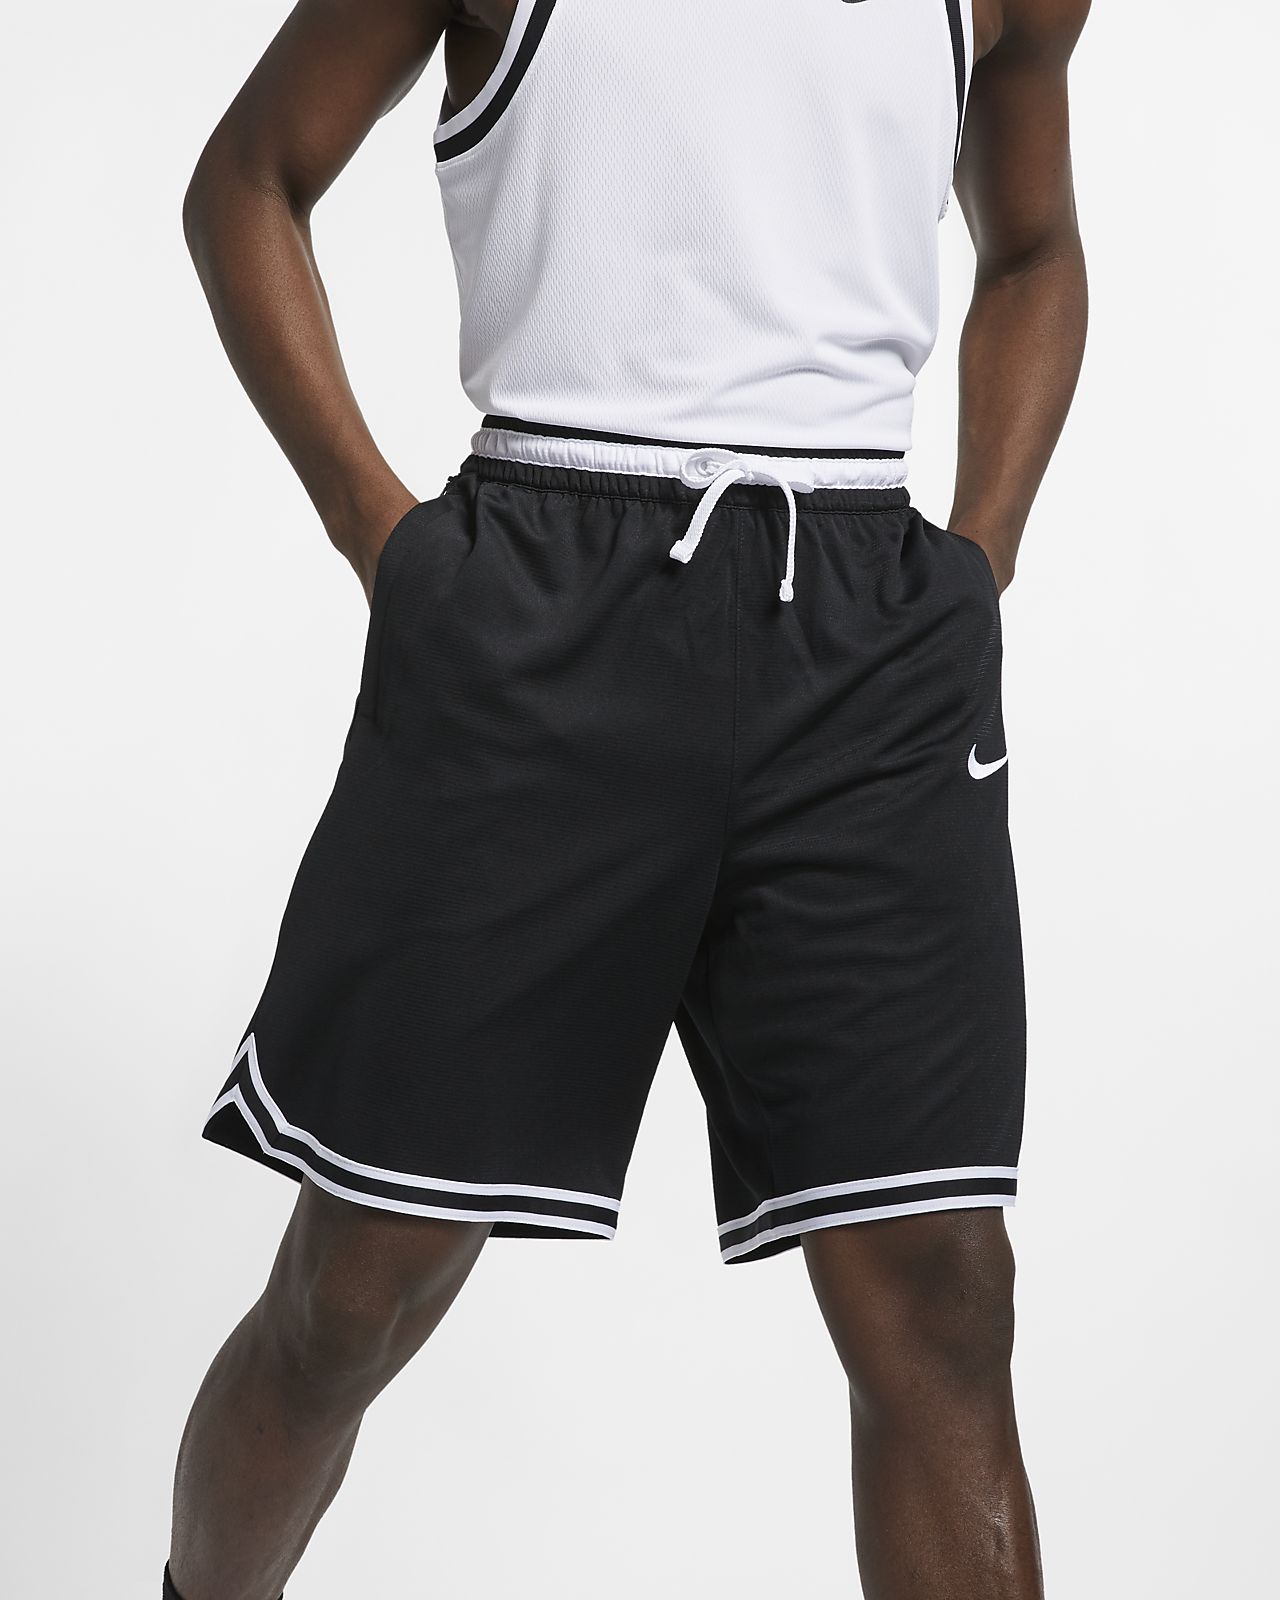 Basketball Shorts, Nike College Spotlight (Oregon State) Men's ...